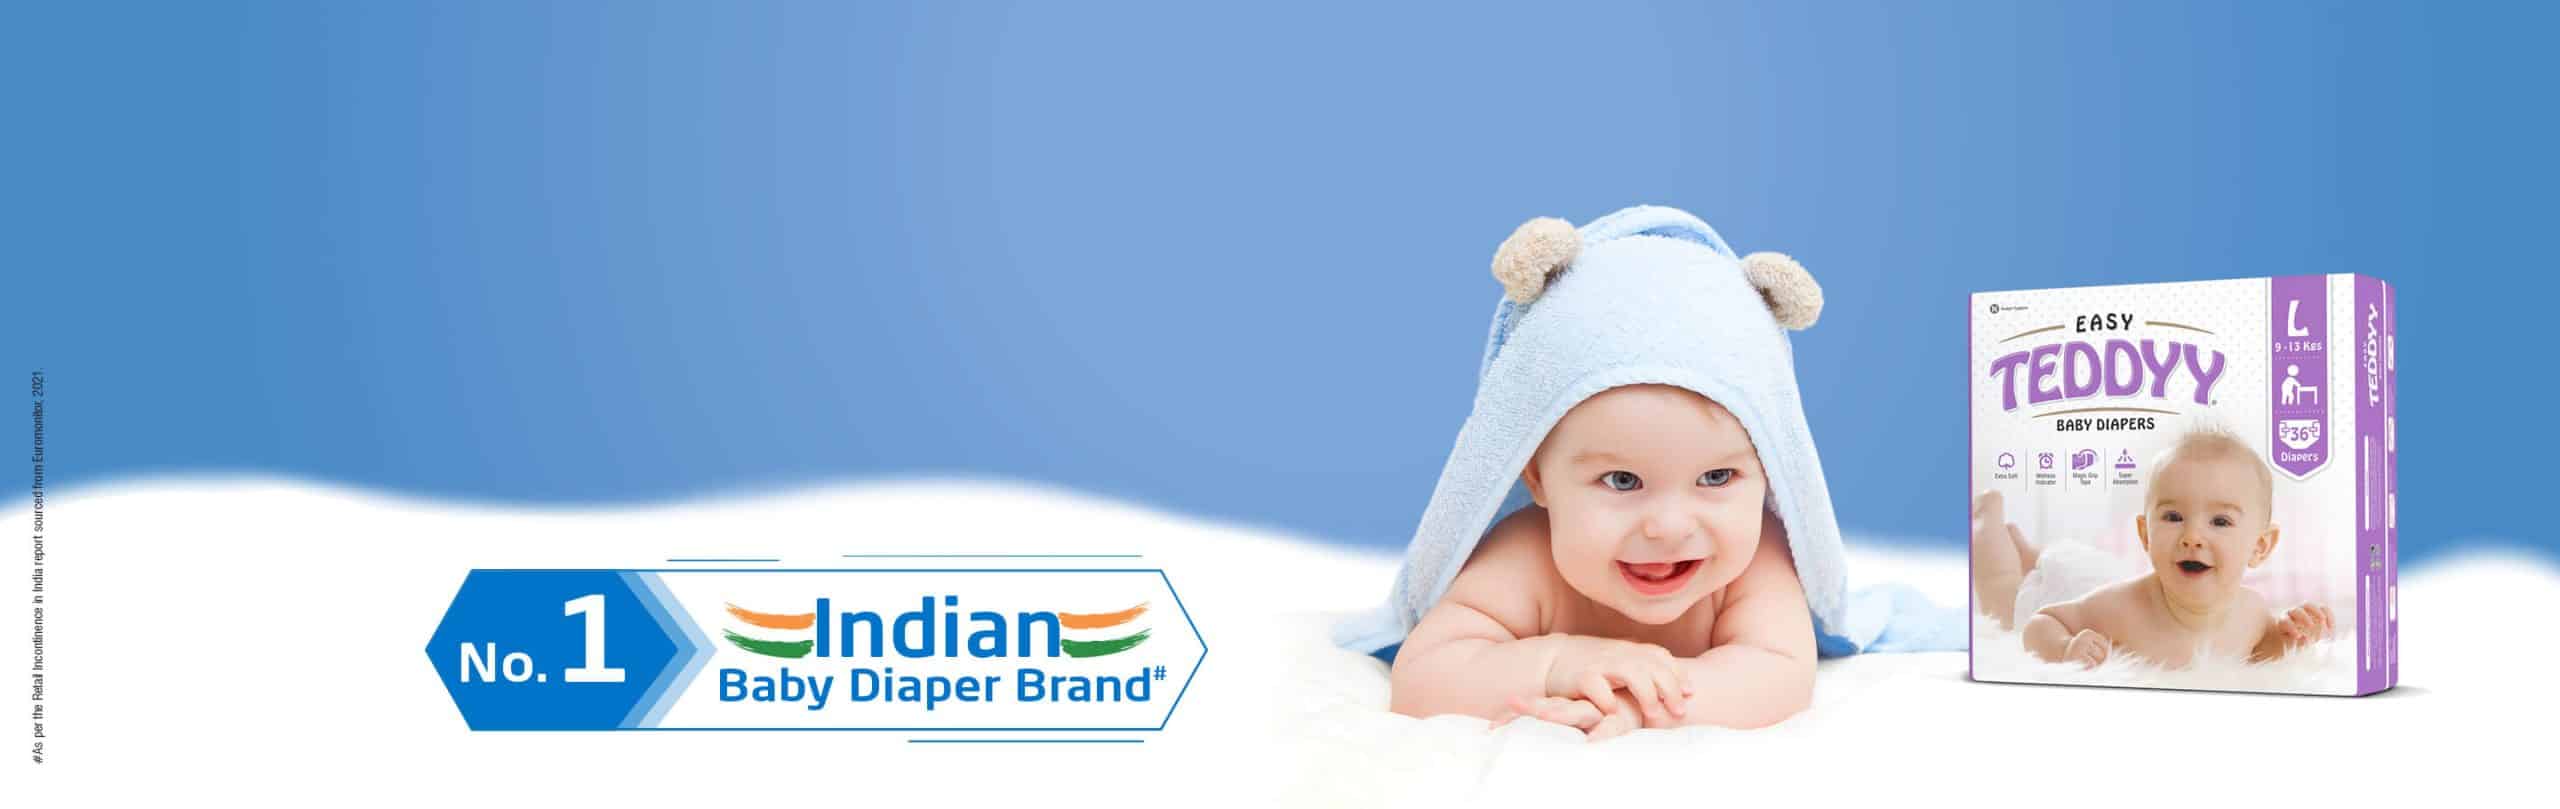 Indian No. 1 Baby Diaper